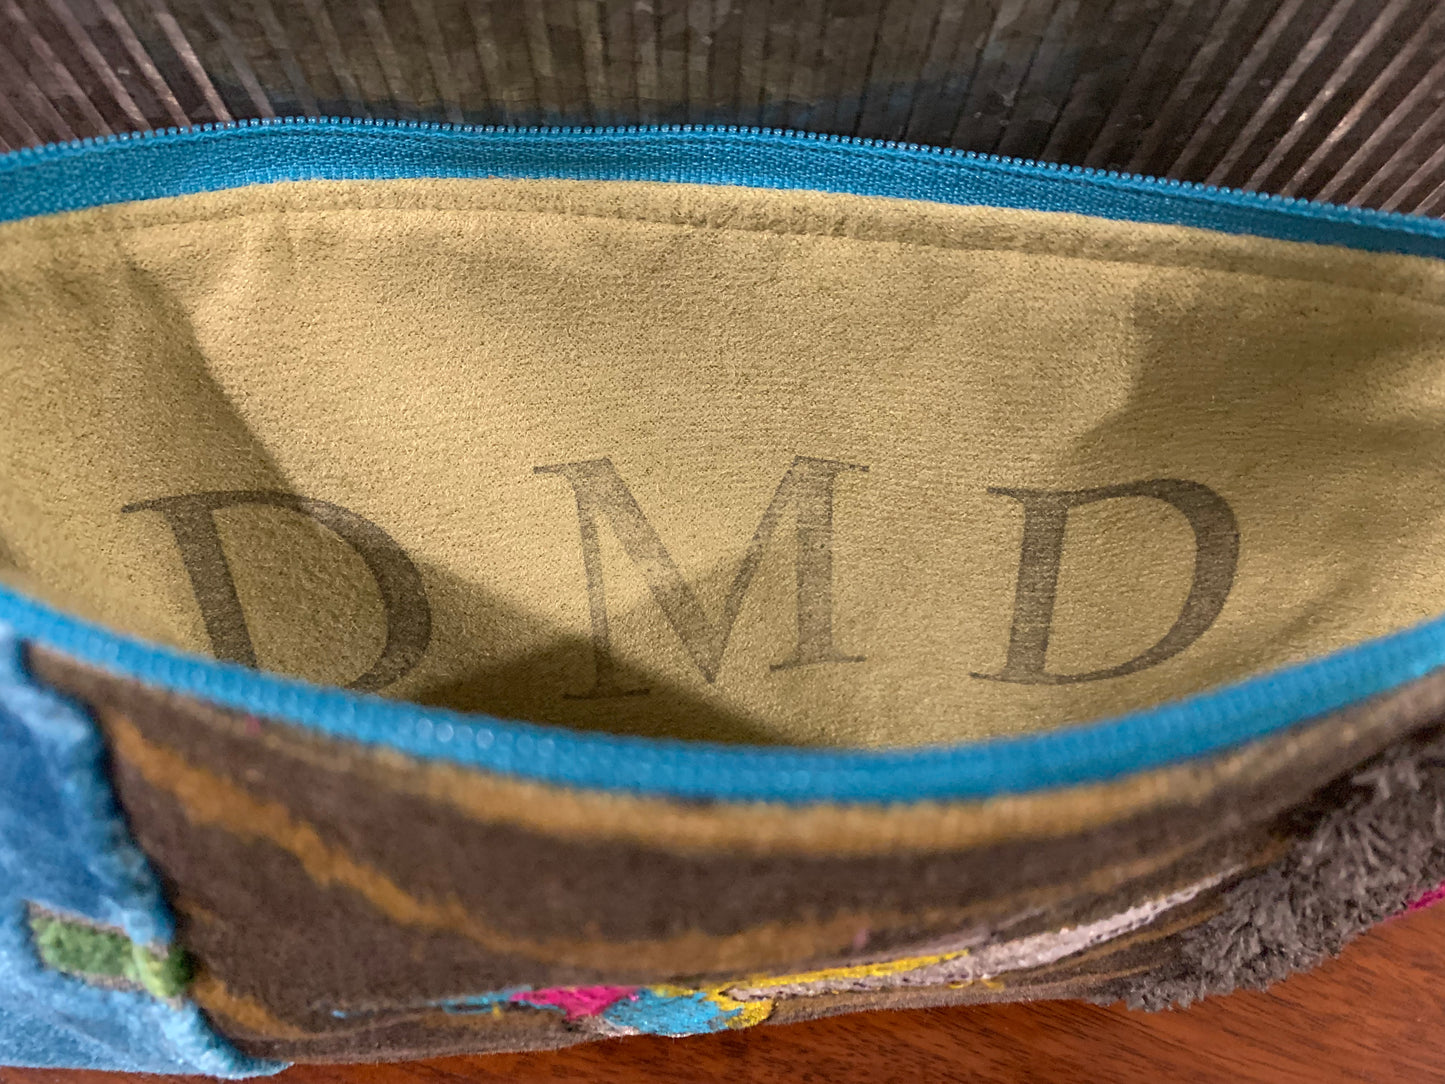 Hummingbird Patchwork Slim Pouch - DMD Bags